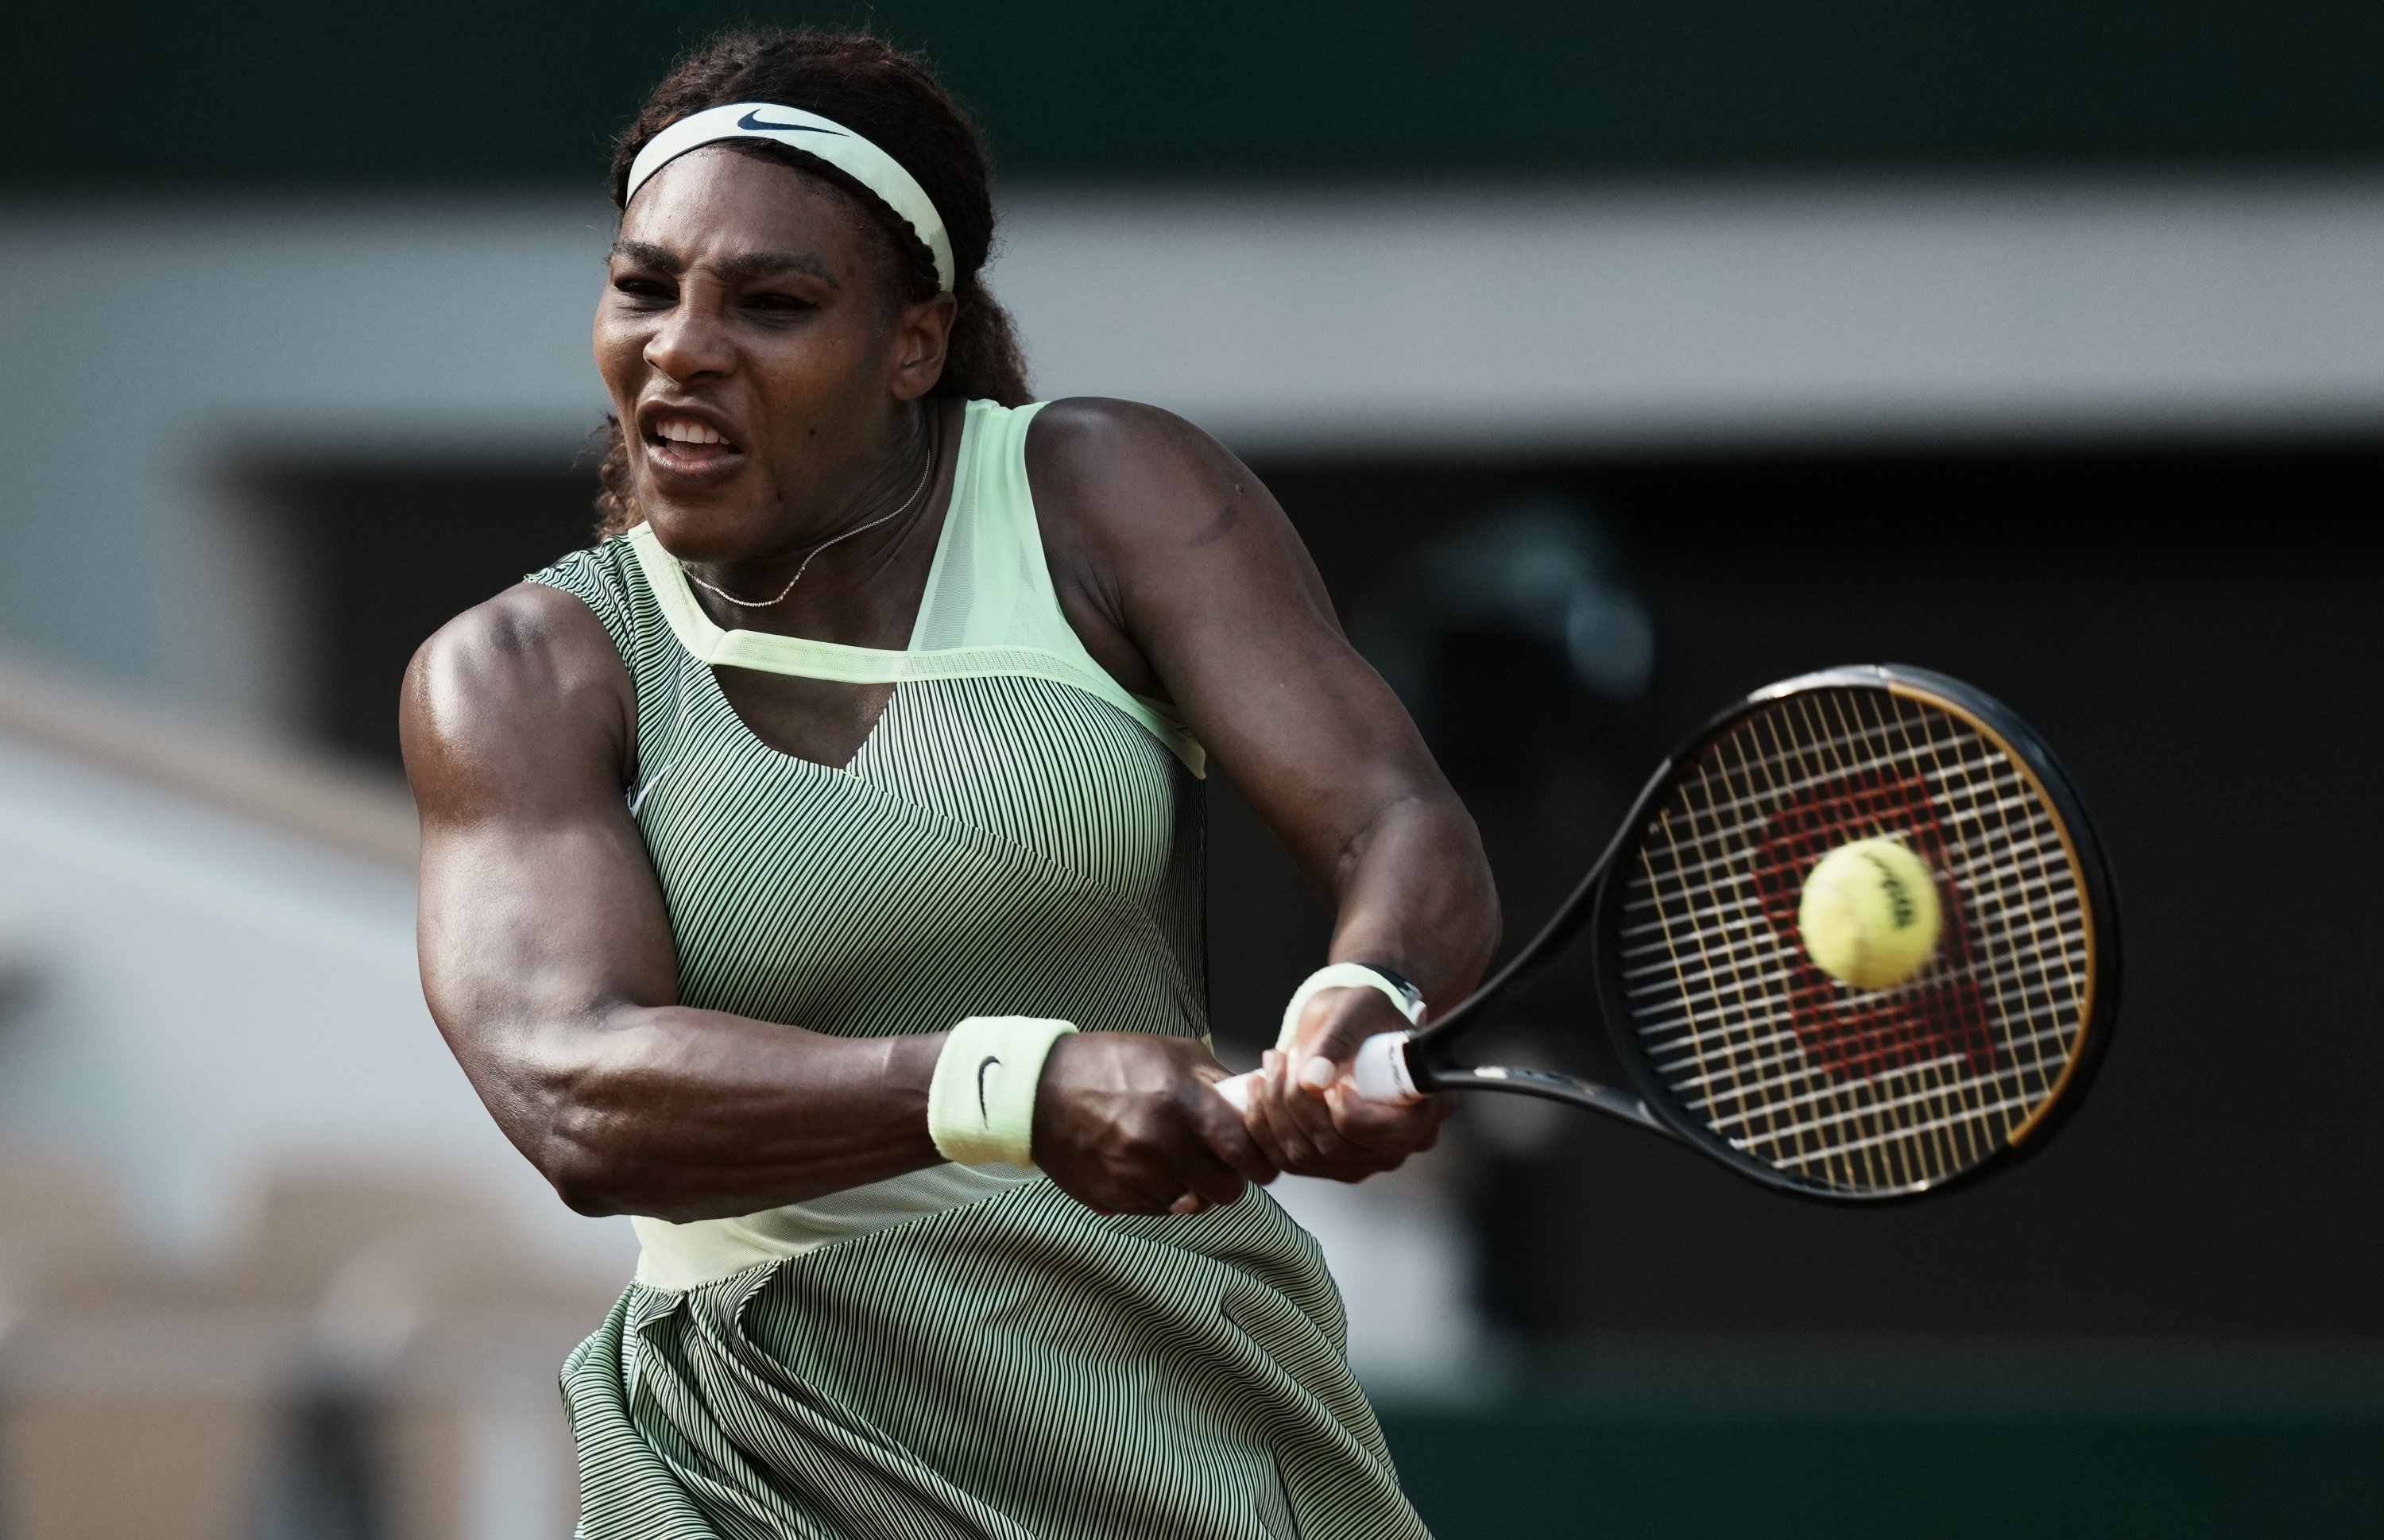 A black woman playing tennis